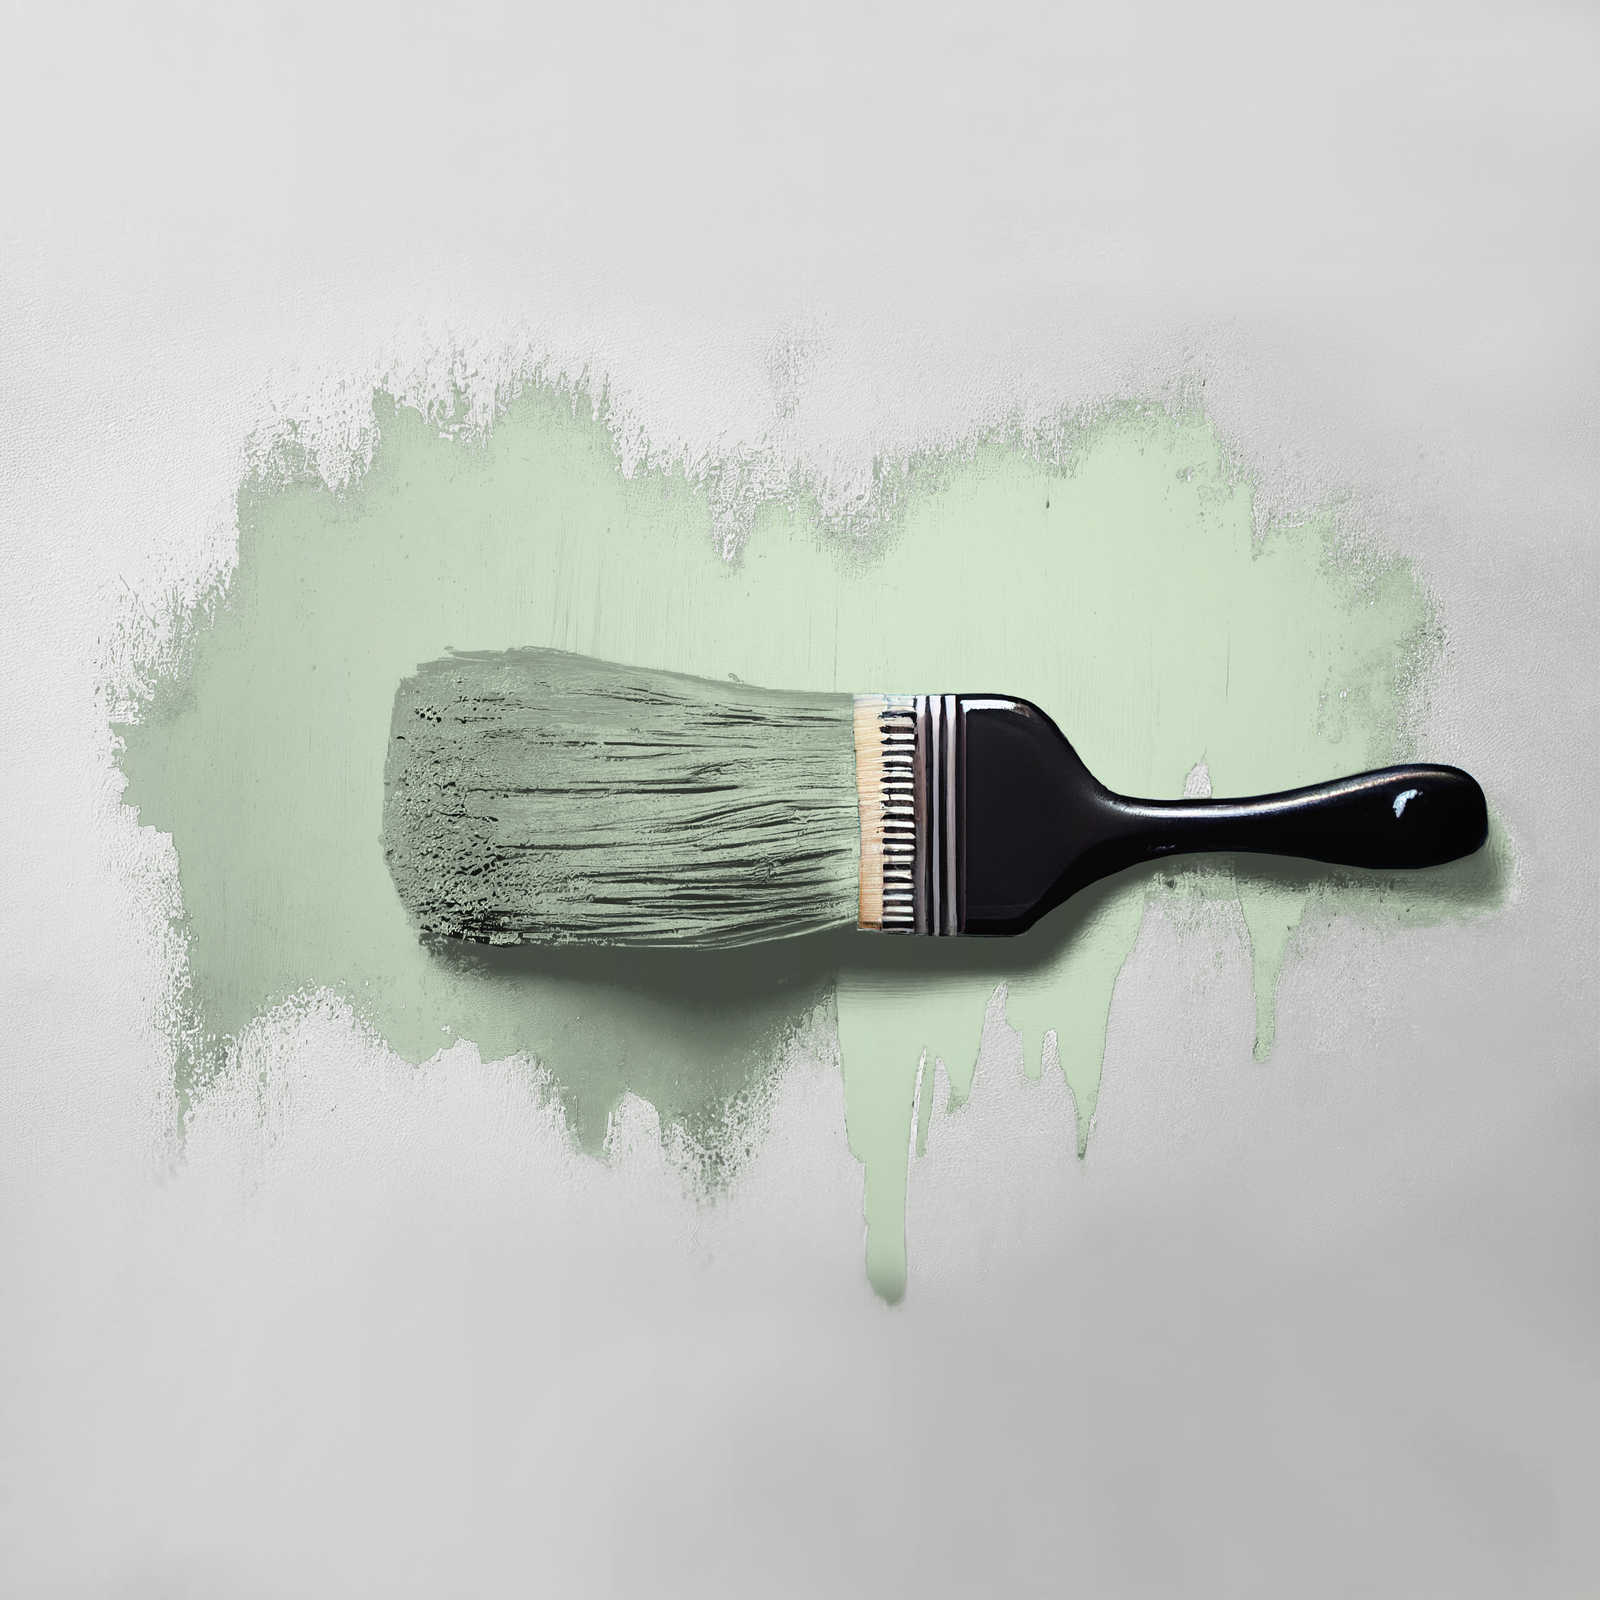             Pittura murale TCK4007 »Woodruff Cream« in verde pastello sereno – 5,0 litri
        